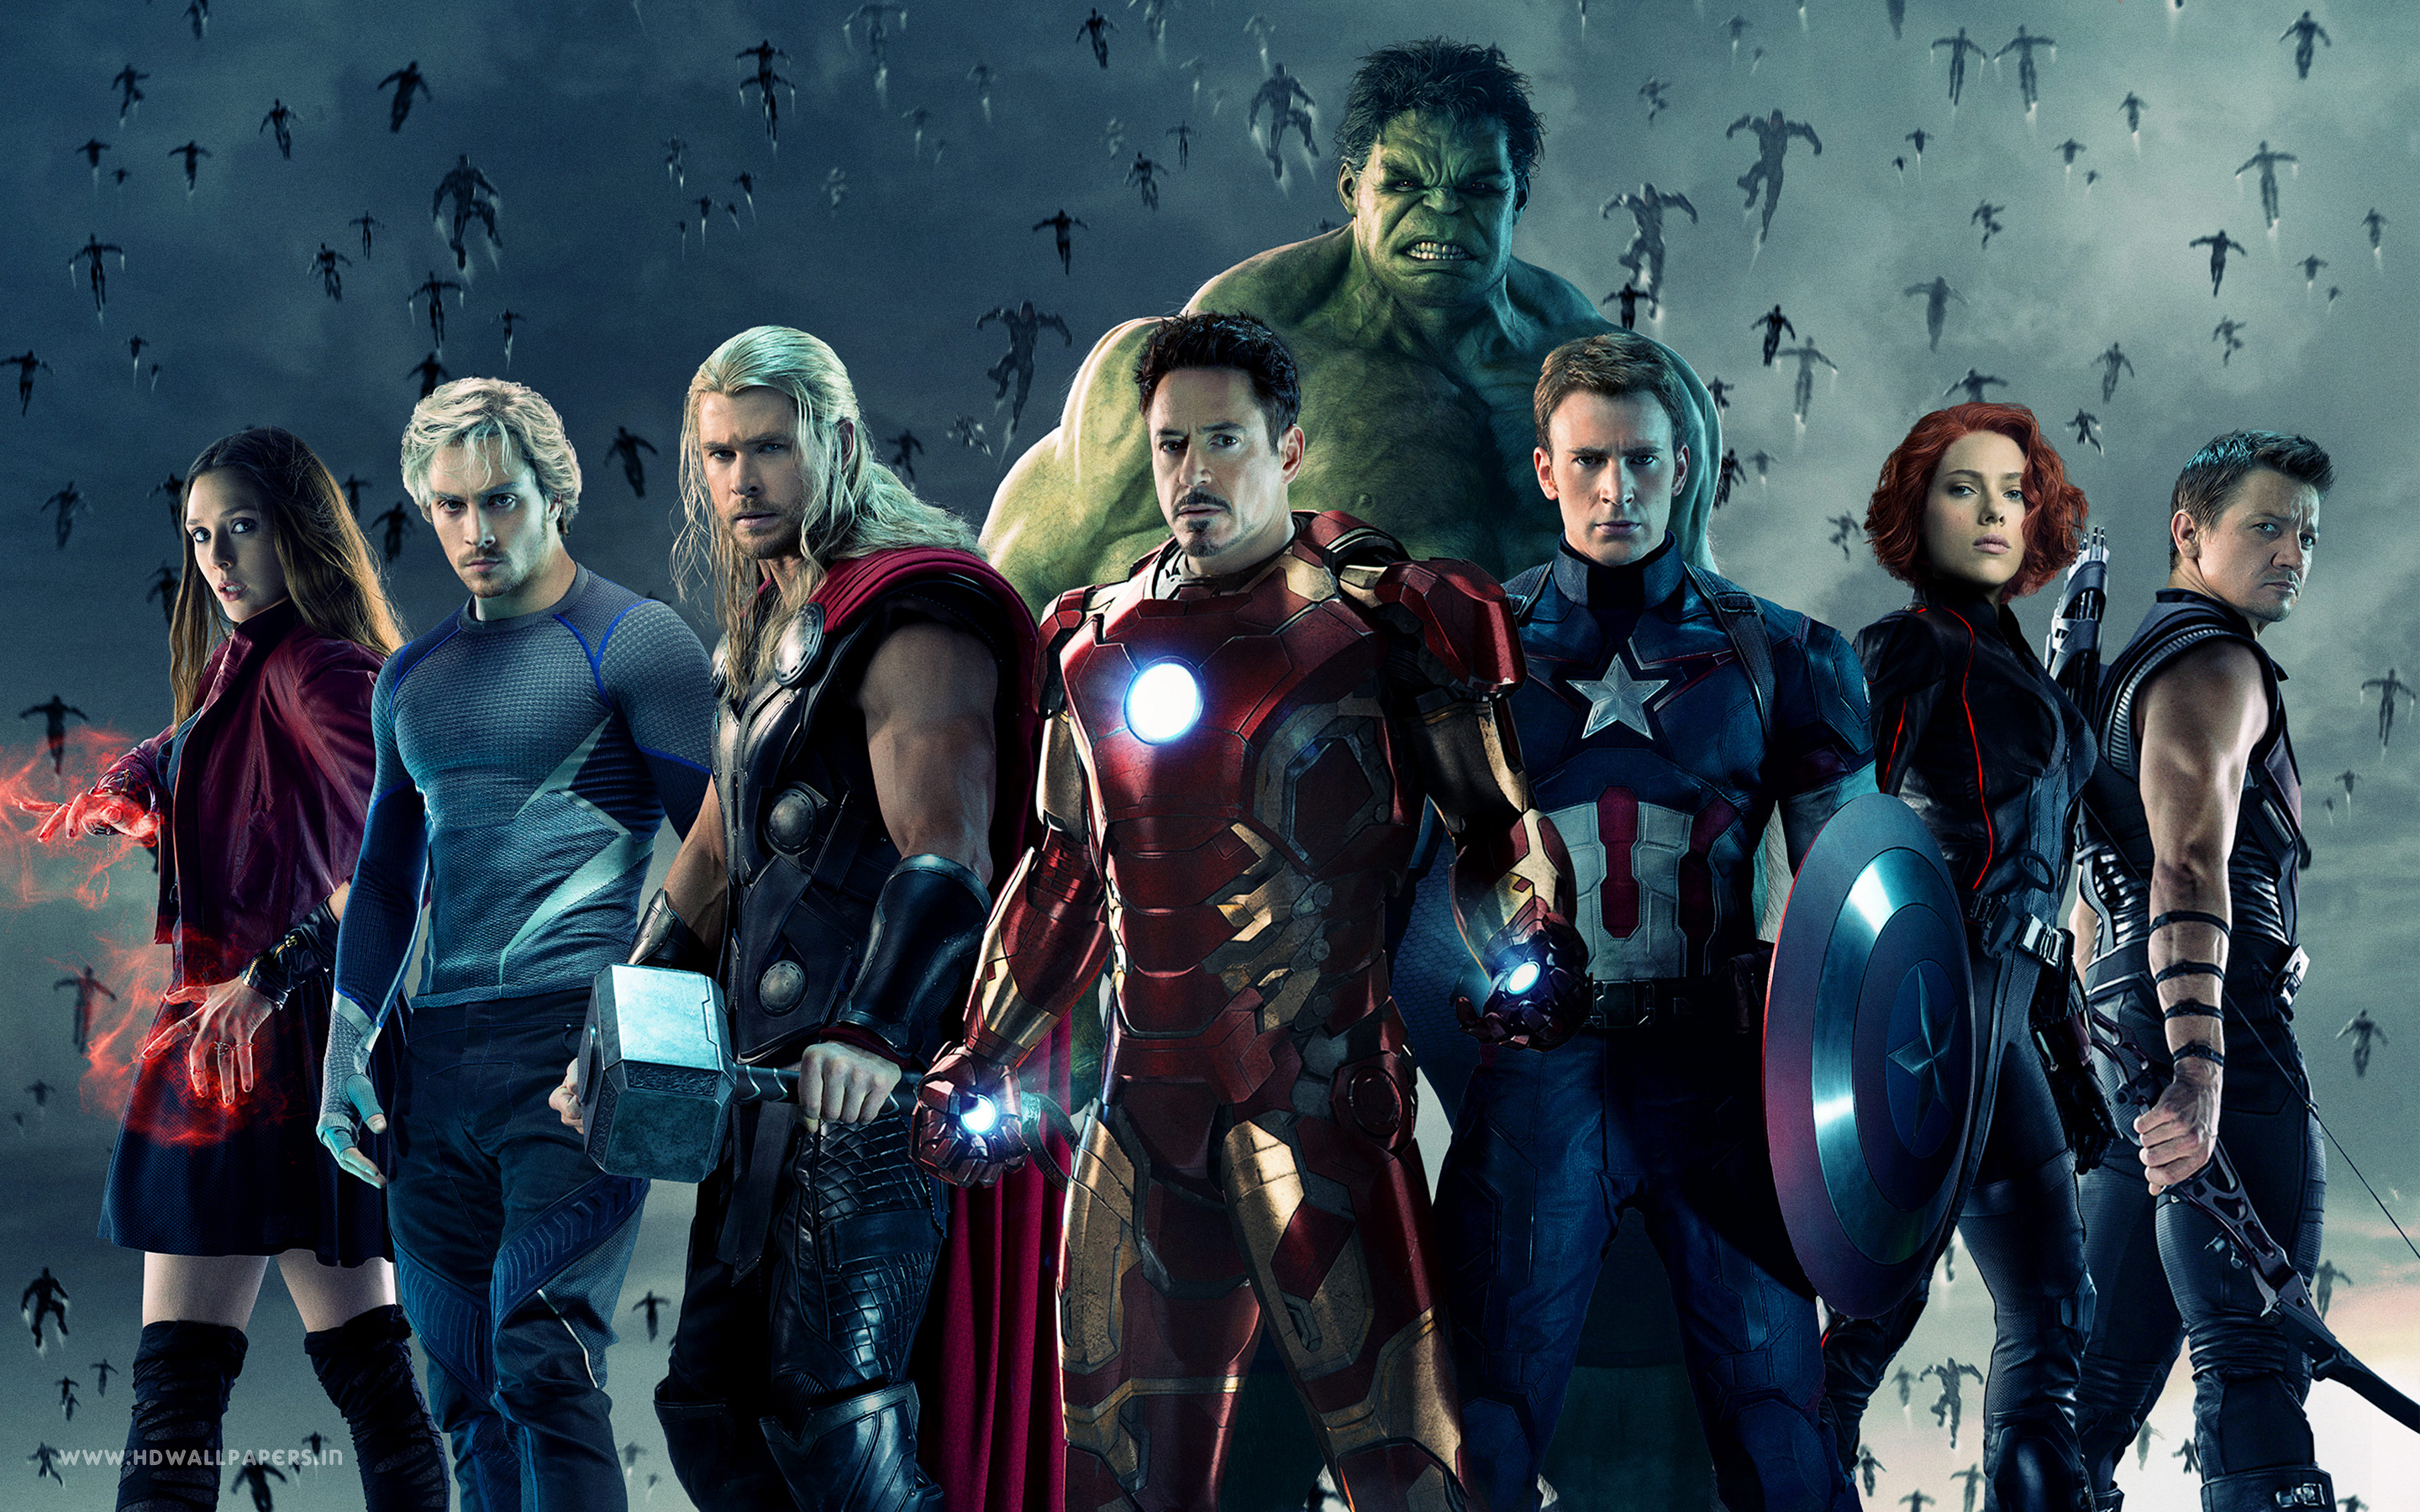 http://www.miblogdecineytv.com/wp-content/uploads/2015/05/The-Avengers-Age-of-Ultron2.jpg